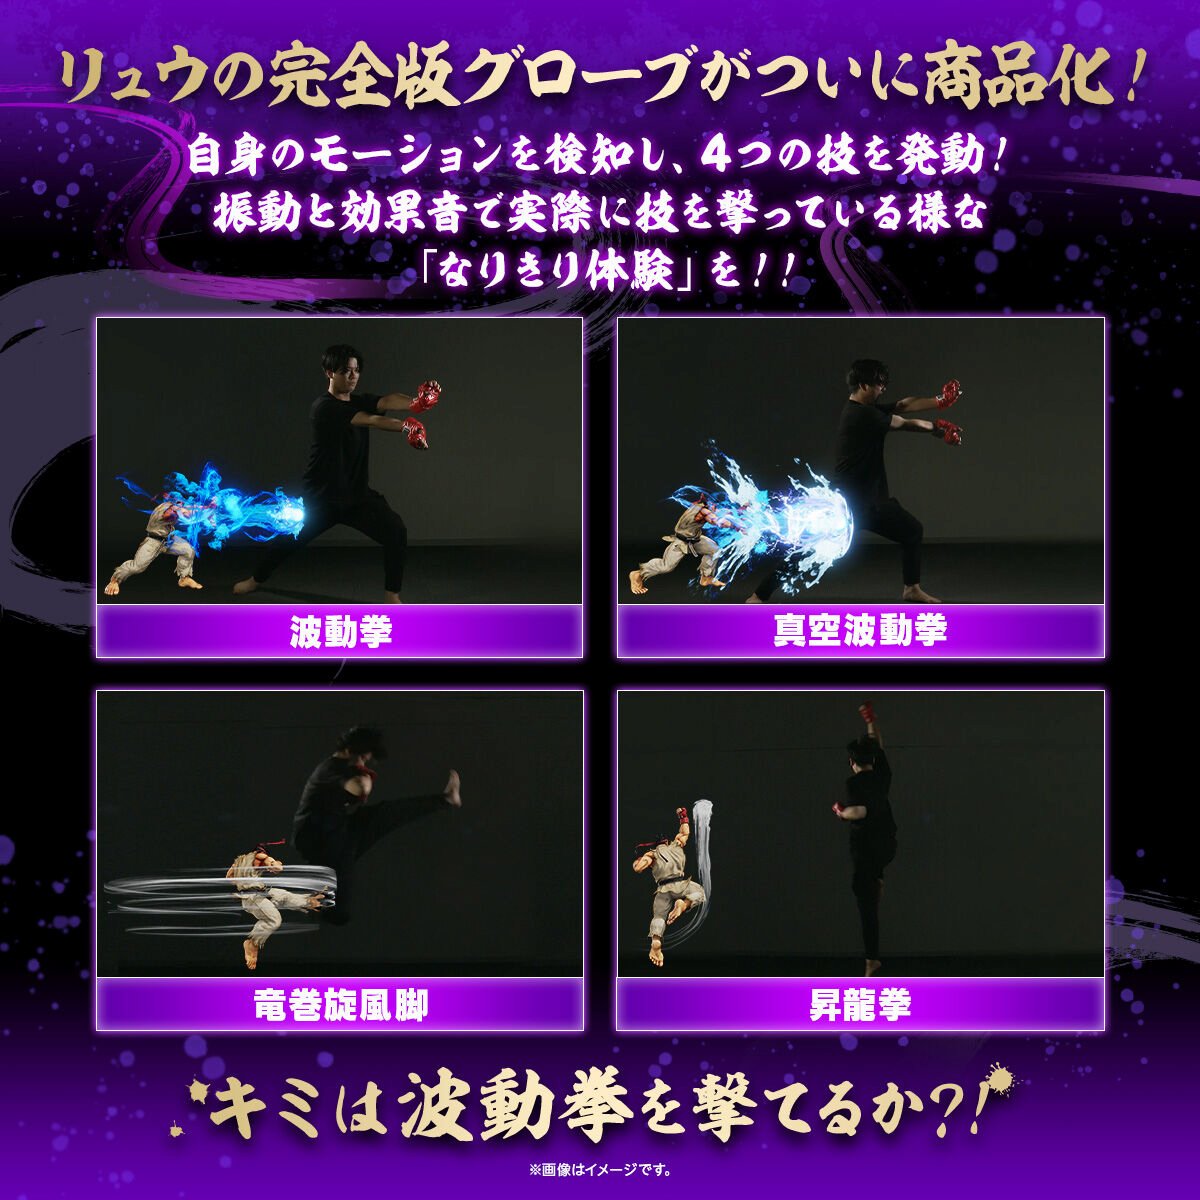 Random: New Street Fighter V Gloves Will Let You Unleash Your Inner Ryu